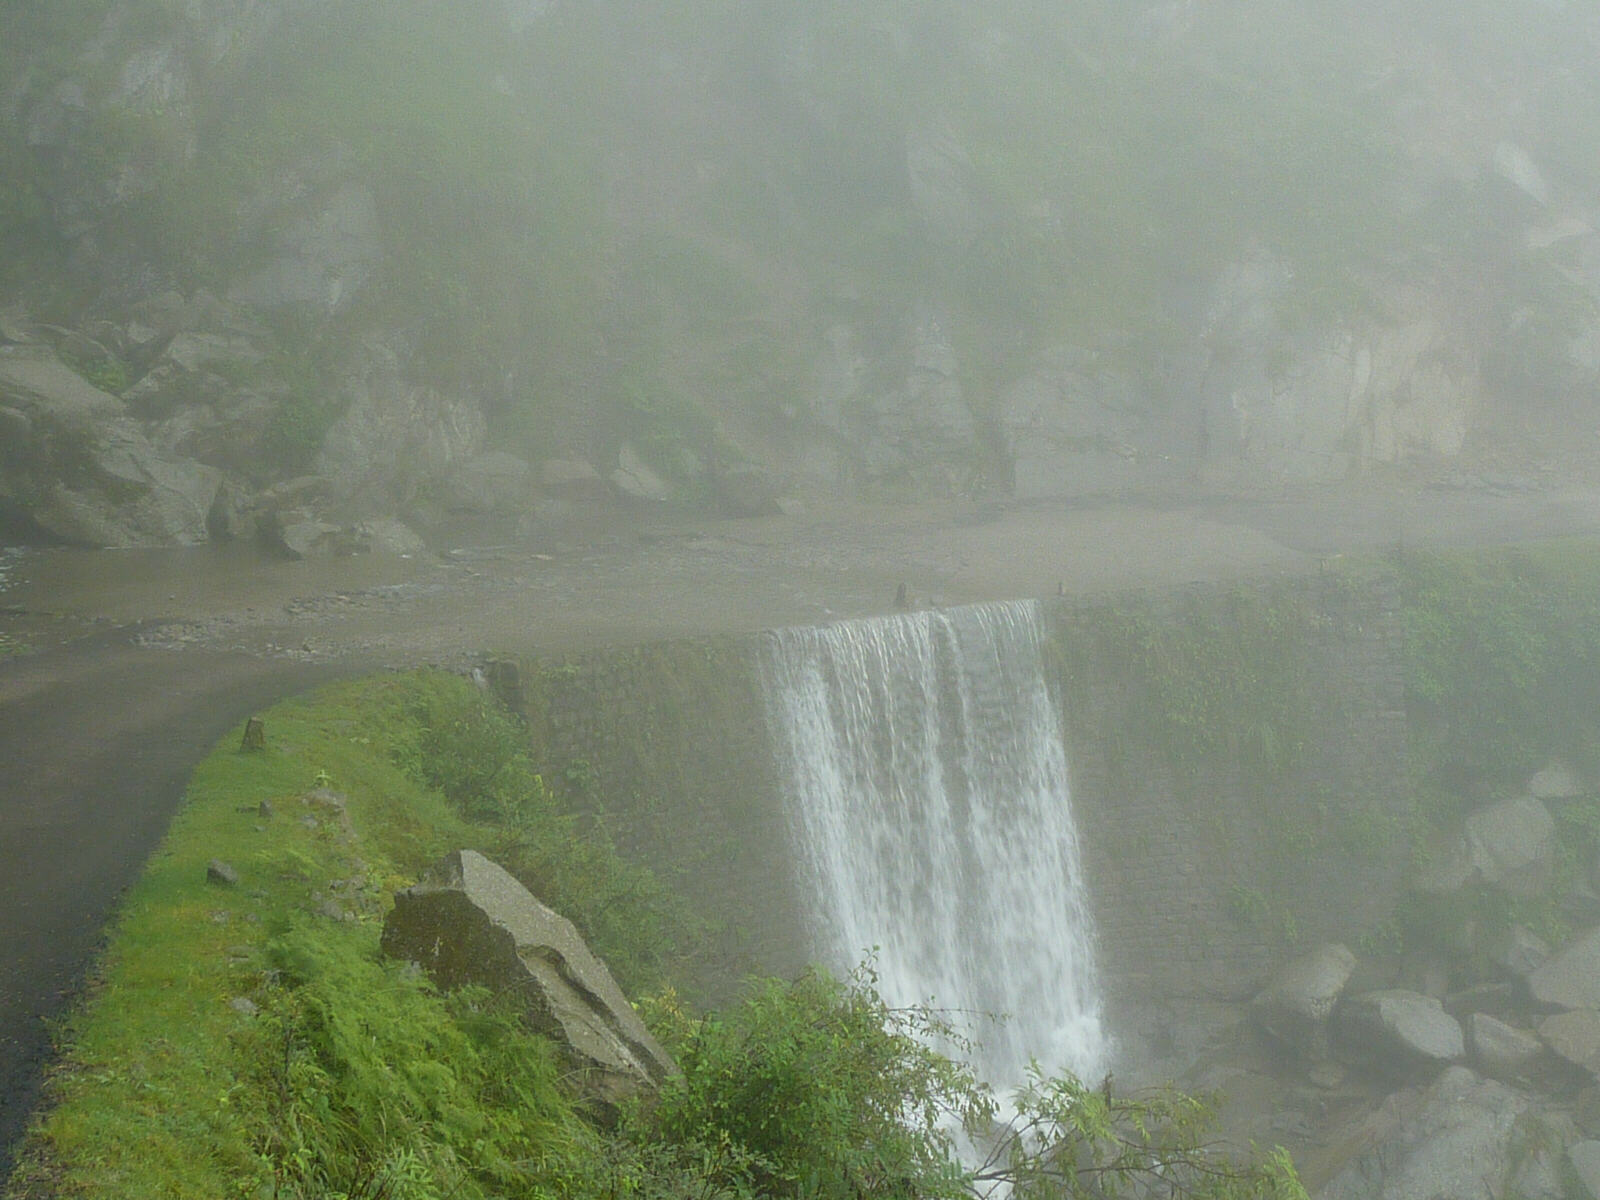 Waterfall on the road near Chamba, Himachal Pradesh, India